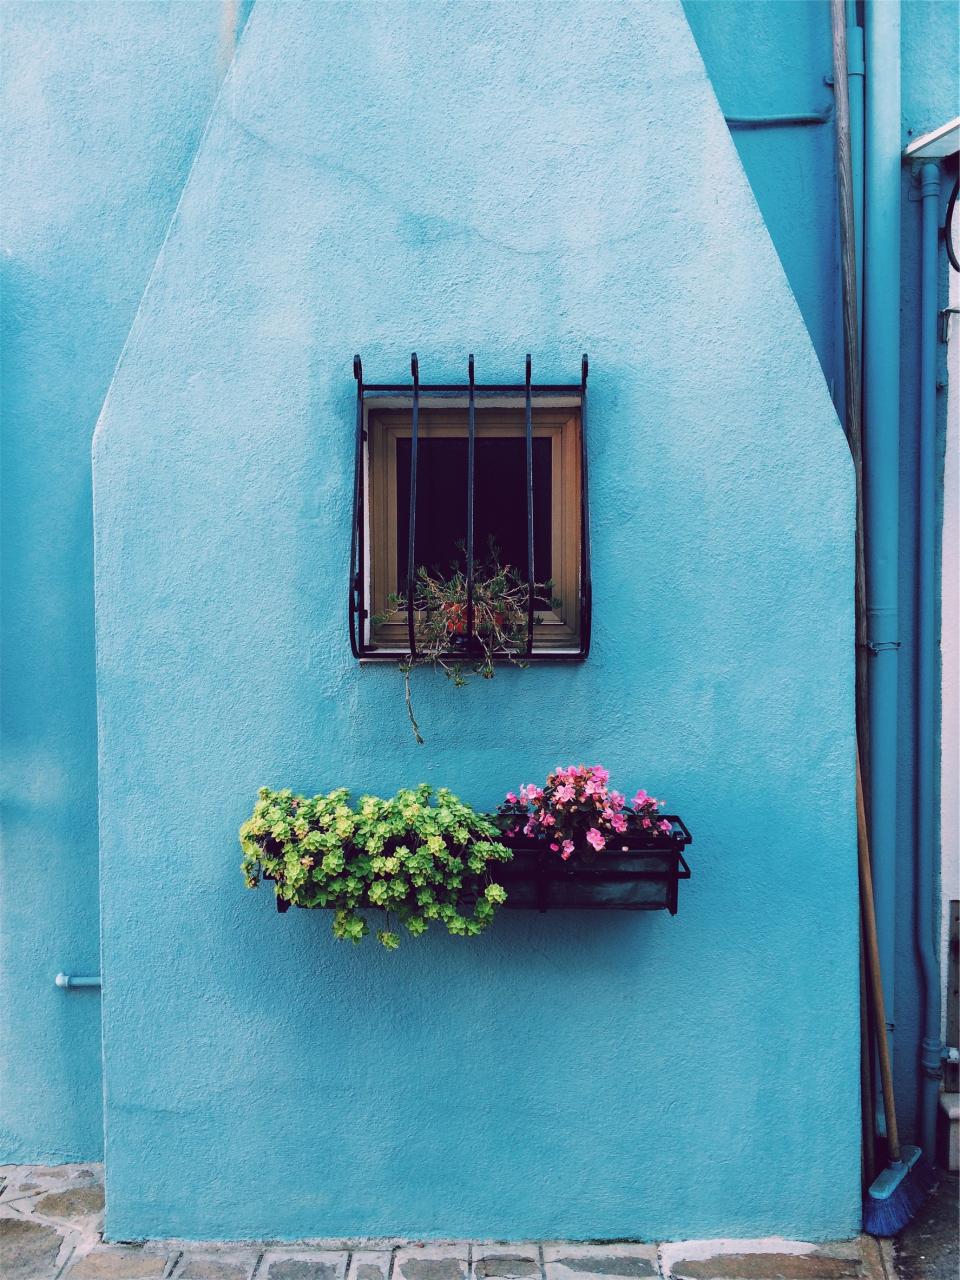 window wall pots house flowers blue basket bars 